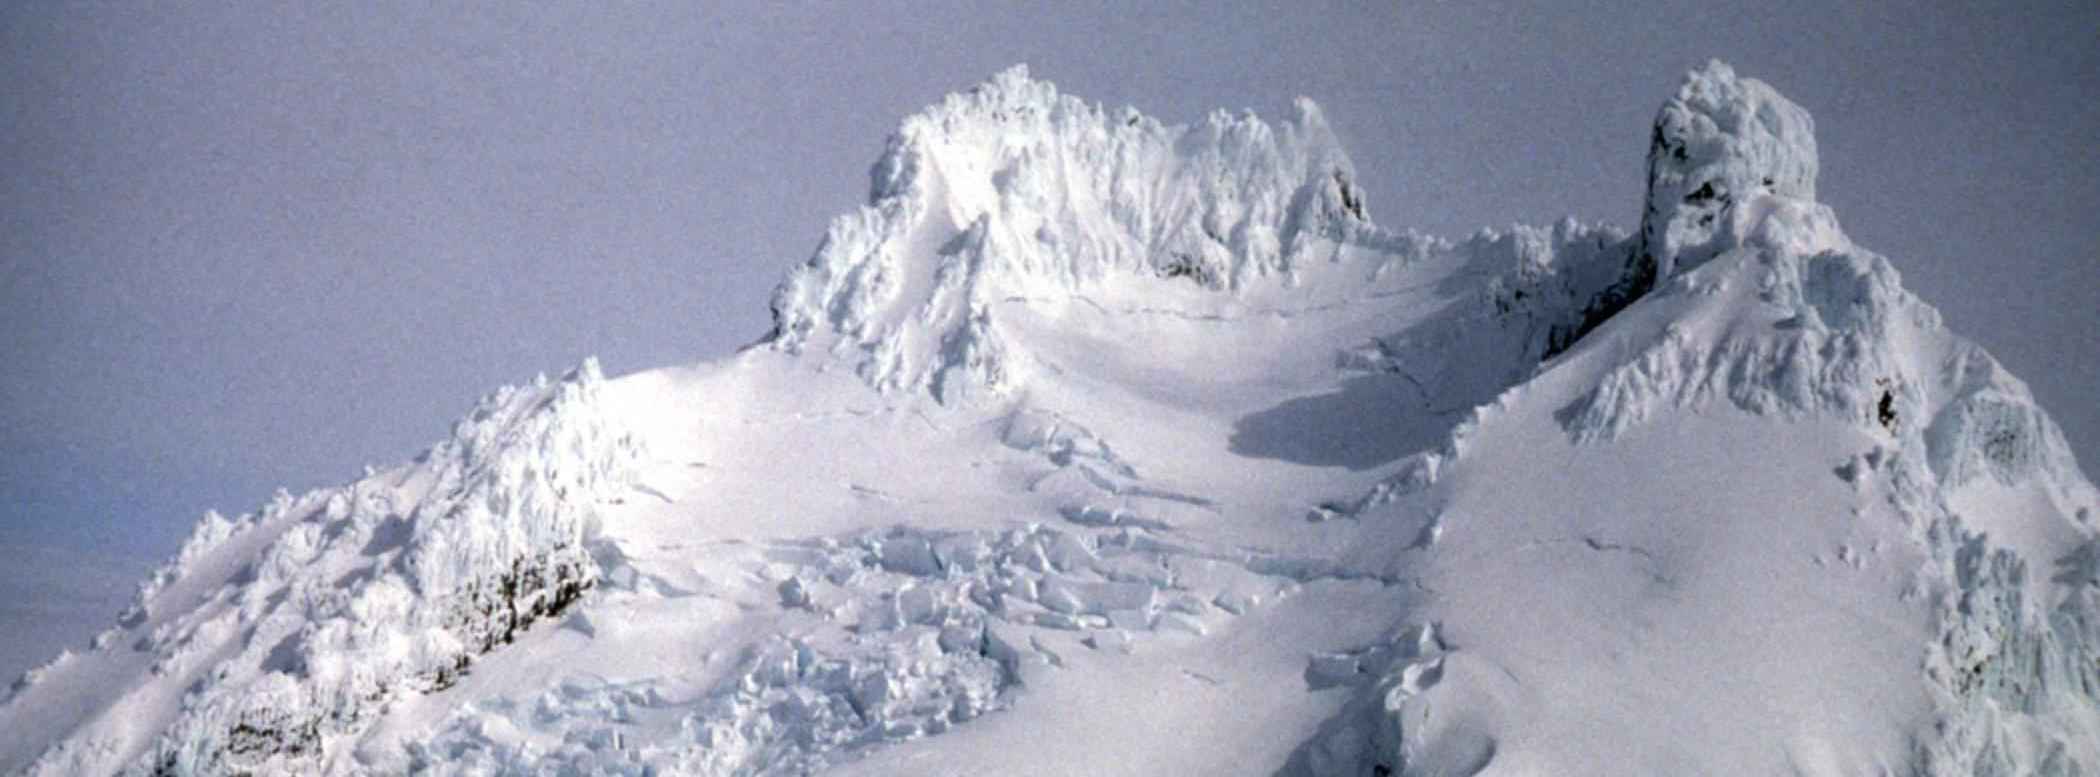 Isanotski Volcano Covered With Ice And Snow E1410161482269 مجلة نقطة العلمية